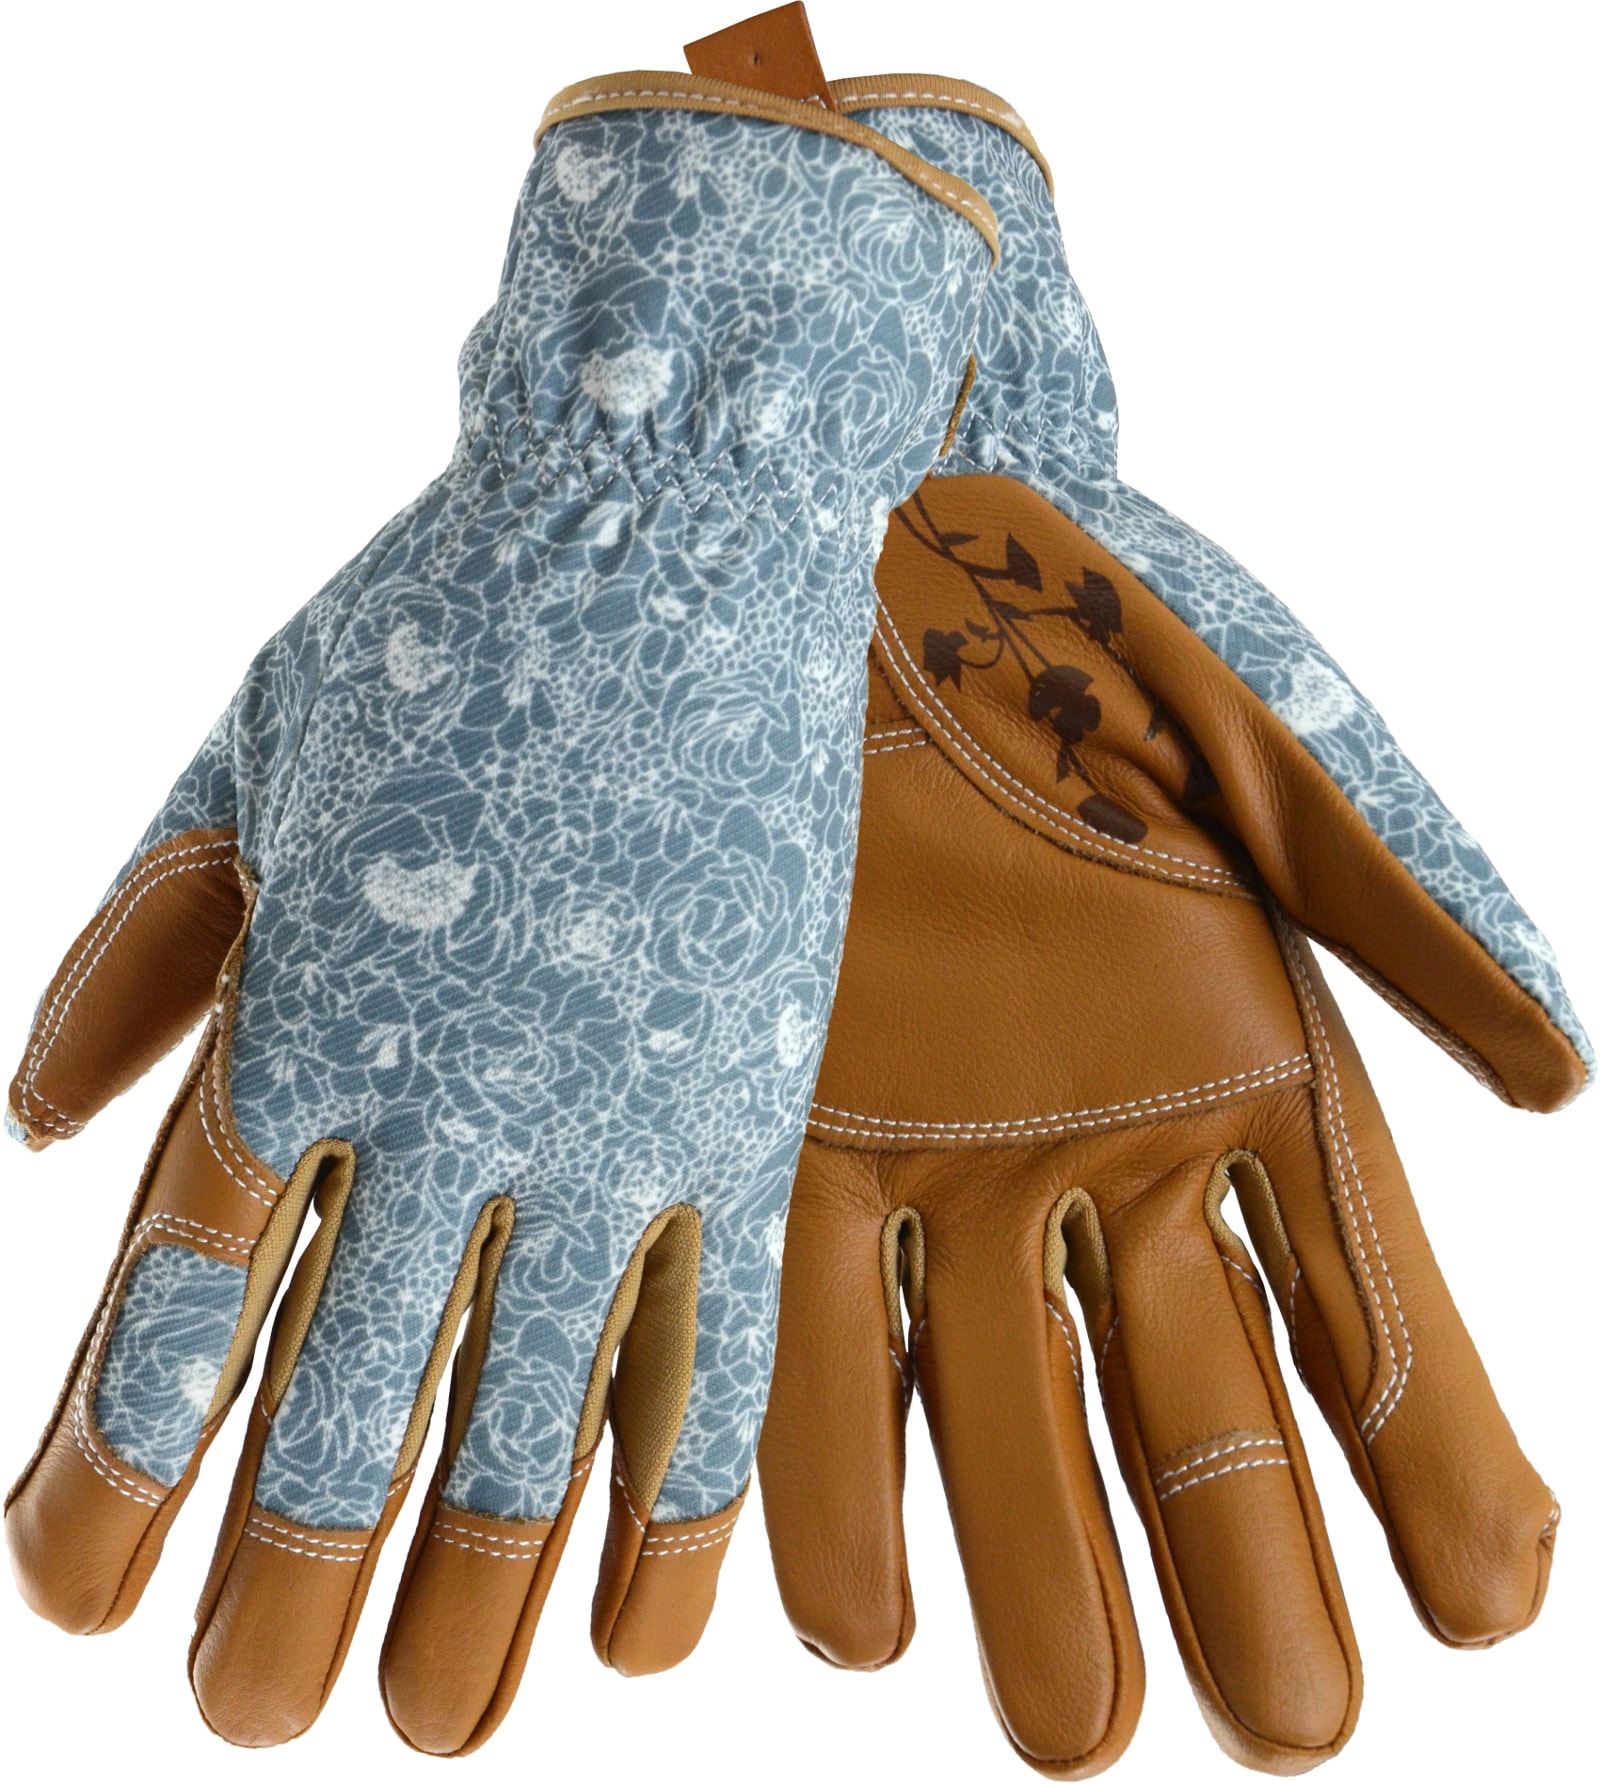 BESSTEVEN 2 Pairs Light Duty Work Gloves Gardening Warehouse Job Car Repair  Utility Yard Glove for Men Women